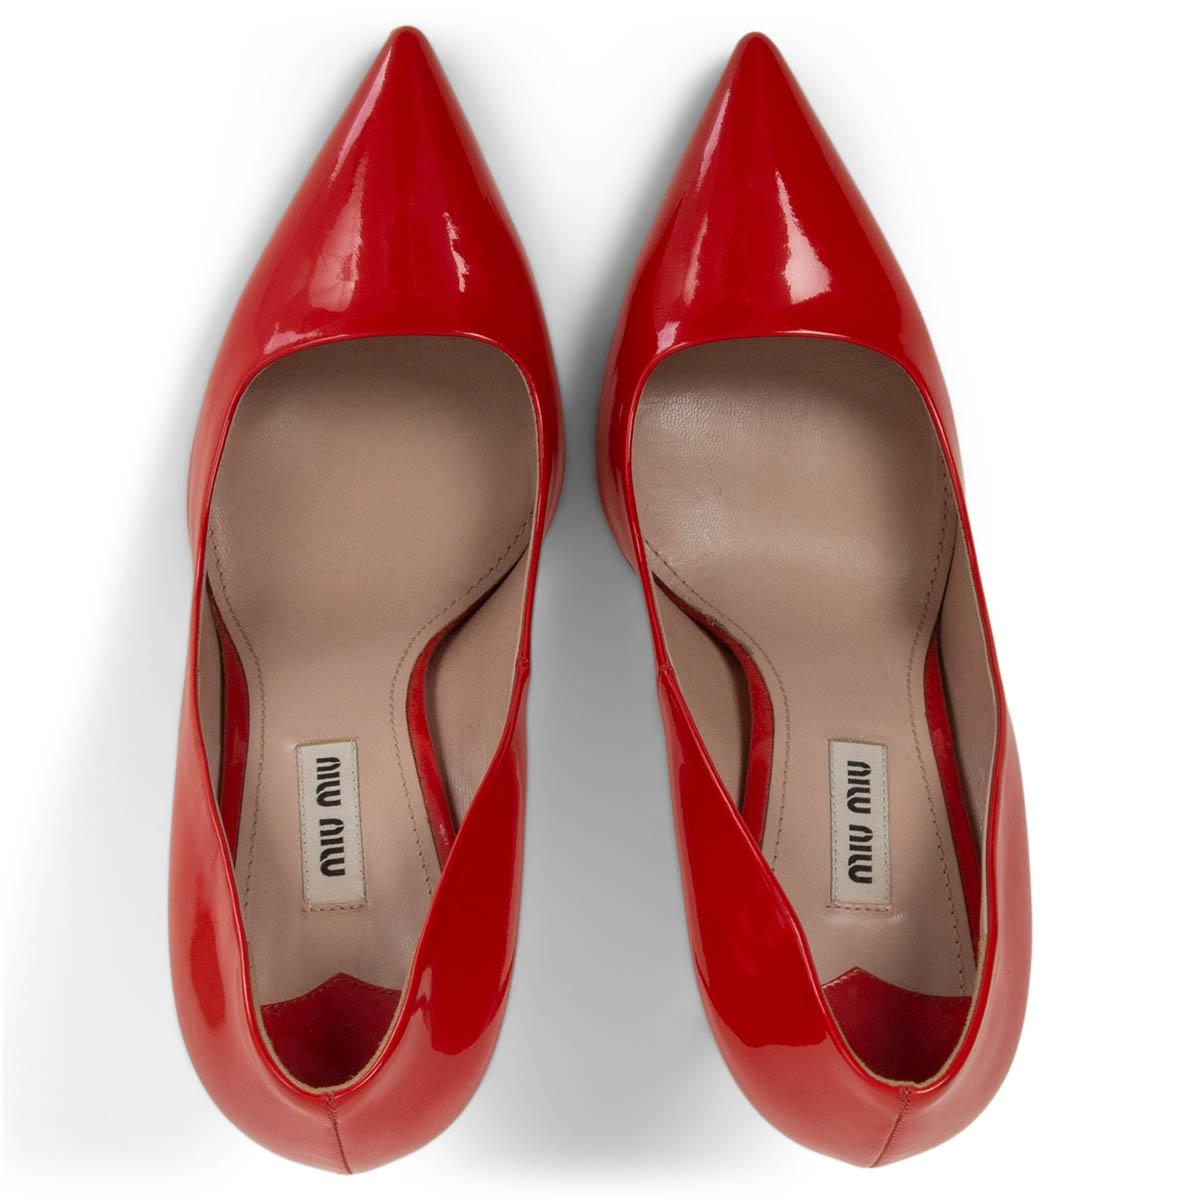 miu miu cherry red heels